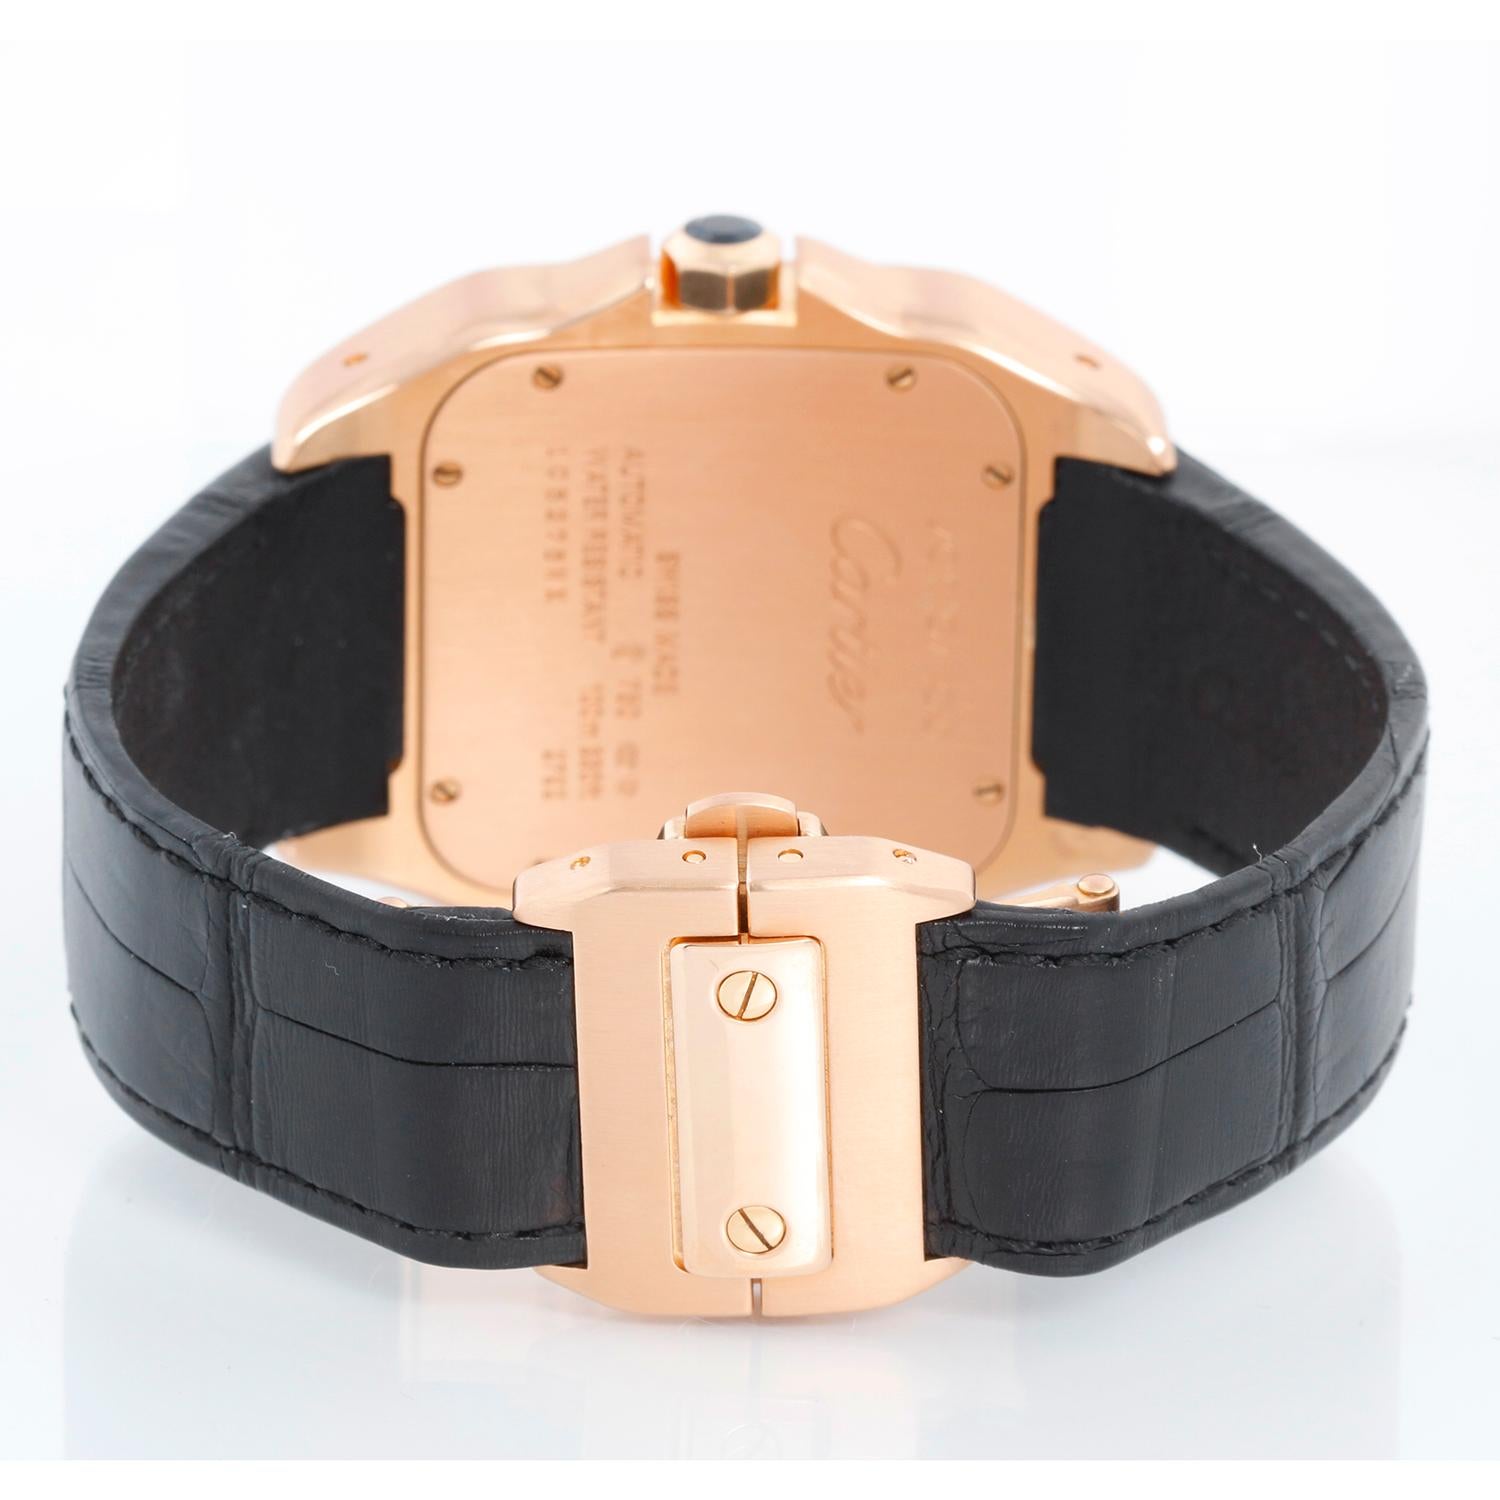 Cartier Santos 100 XL 18K Rose Gold Men's Watch 2792 W20095Y1 For Sale 1